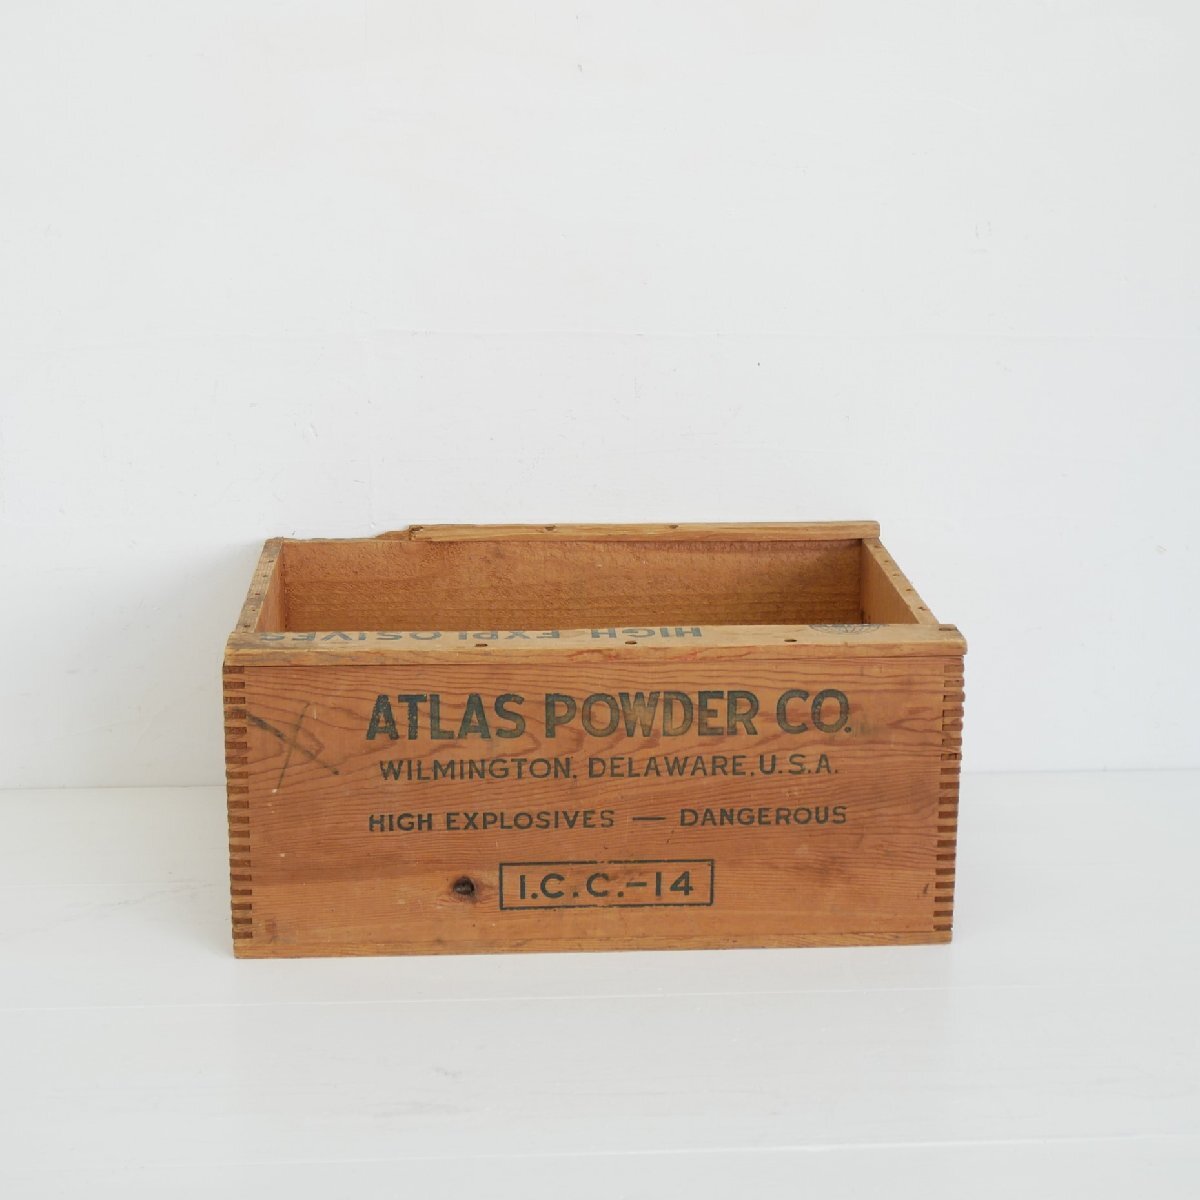 ATLAS POWDER CO. ヴィンテージ 木箱 / デラウェラ州 アトラスパウダー ウッドボックス 運搬箱 店舗什器 ディスプレイ小物 #602-40-124-221_画像2